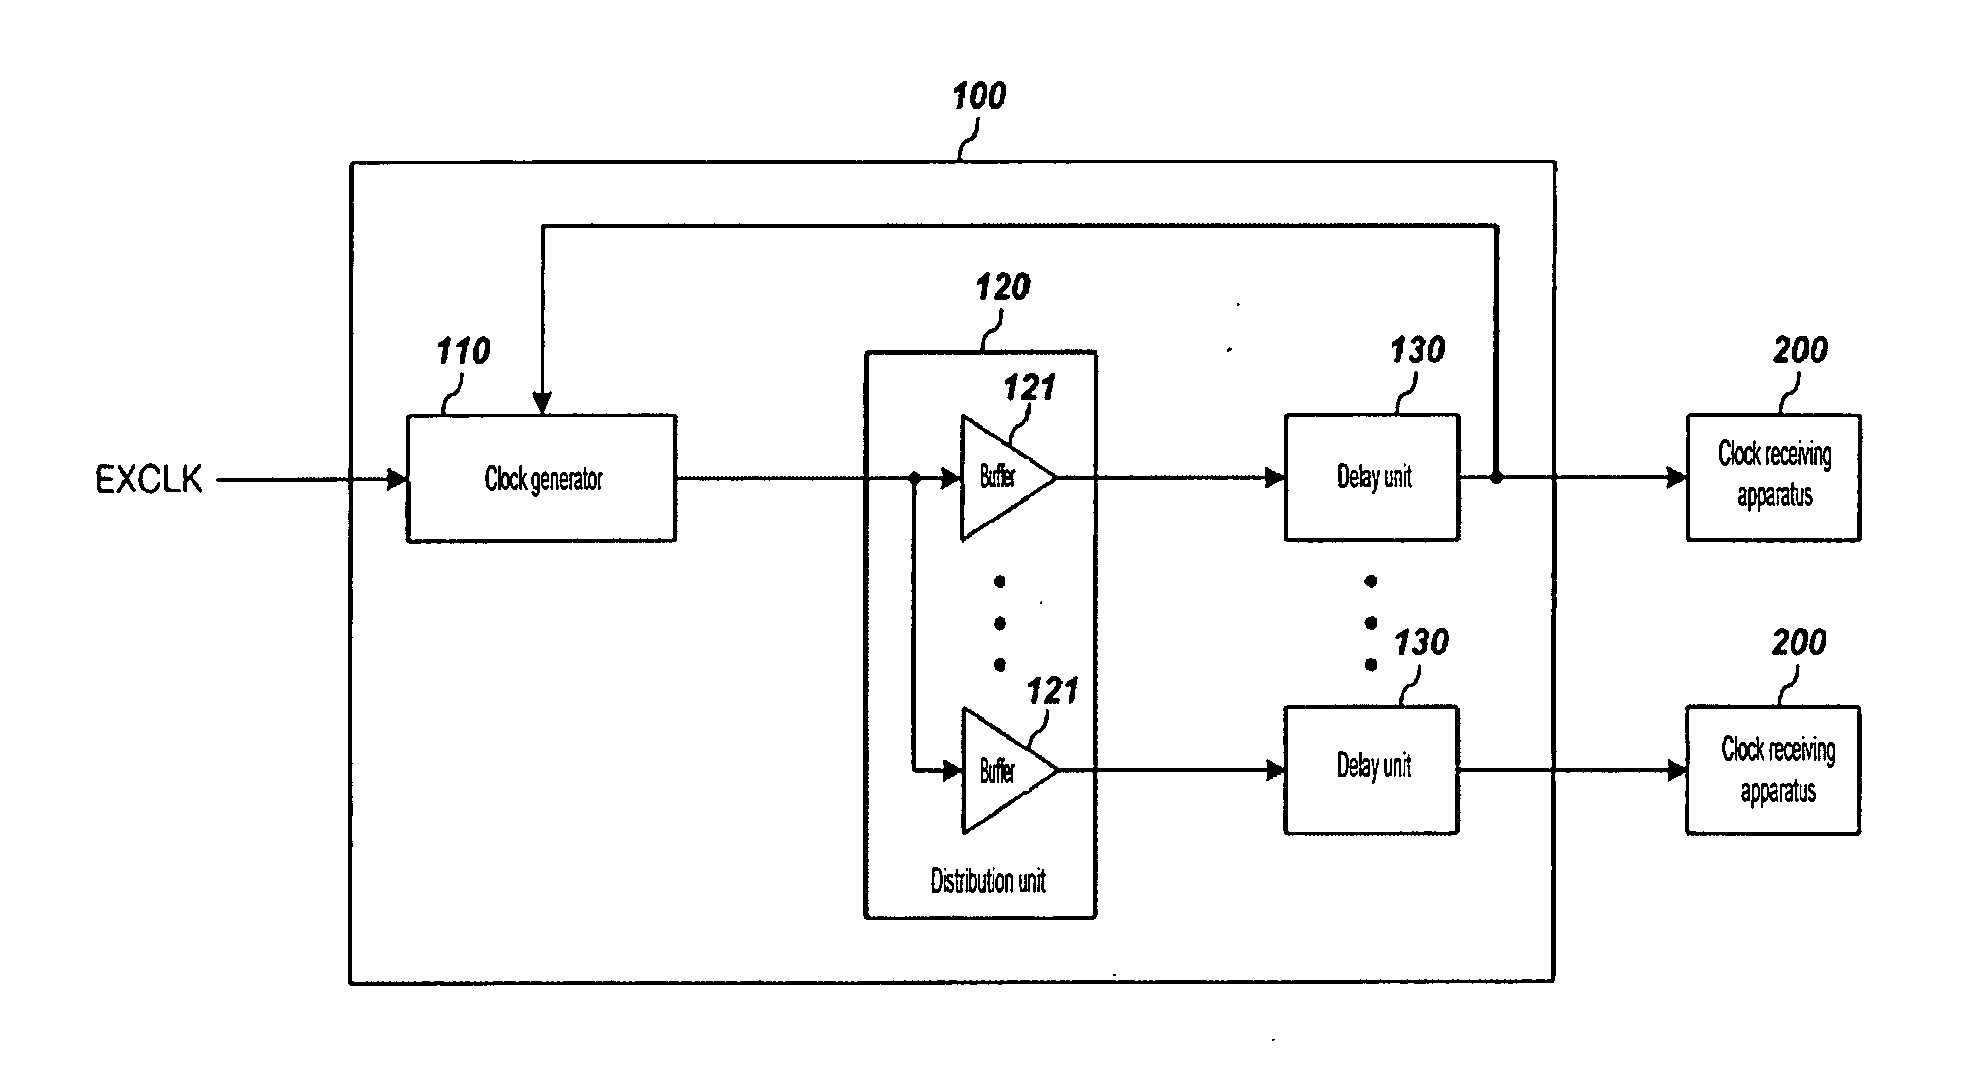 Clock signal generating apparatus and clock signal receiving apparatus